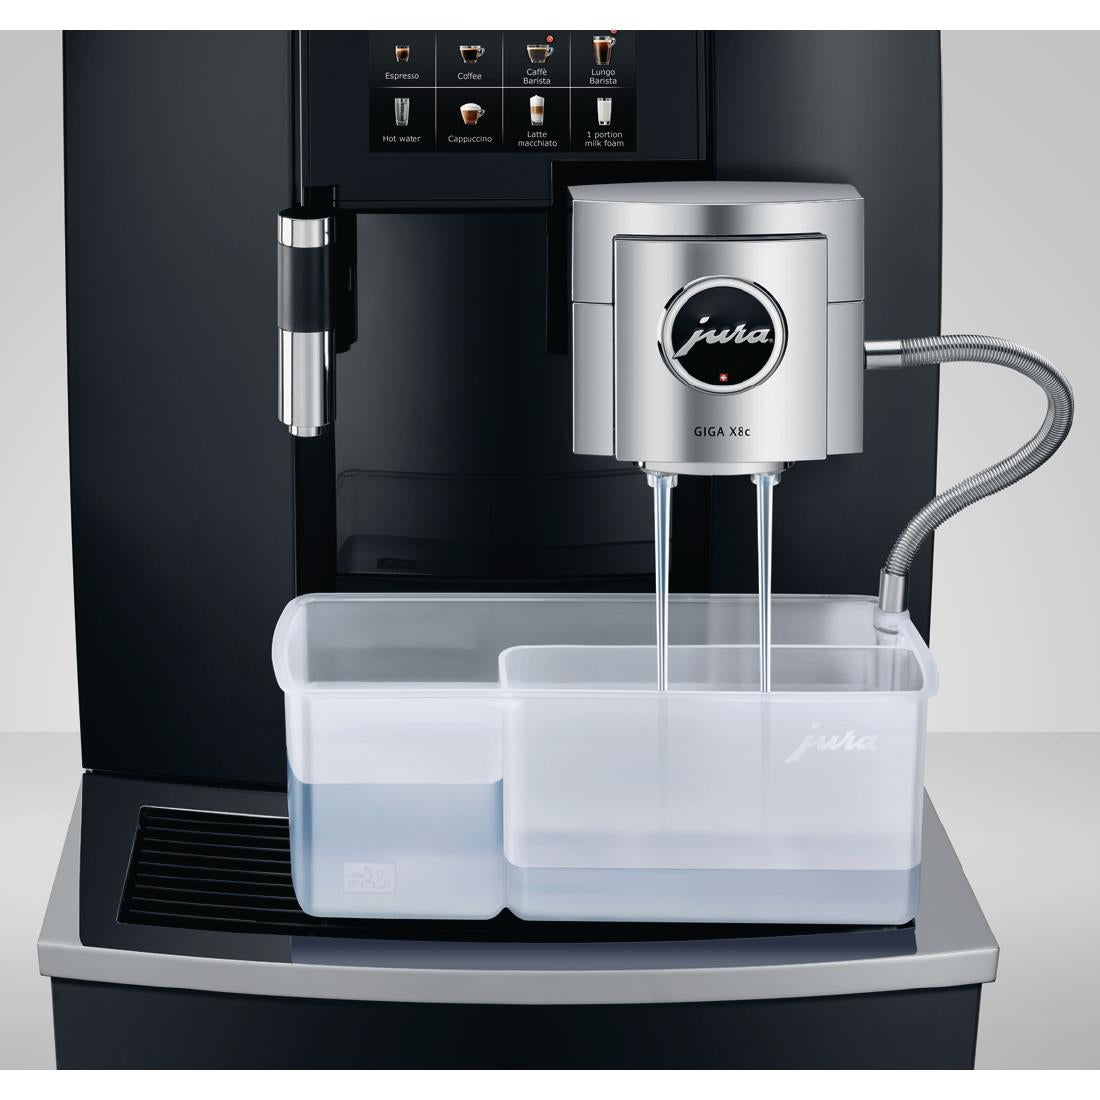 Jura Giga X8c Mains Fill Bean to Cup Coffee Machine Black JD Catering Equipment Solutions Ltd